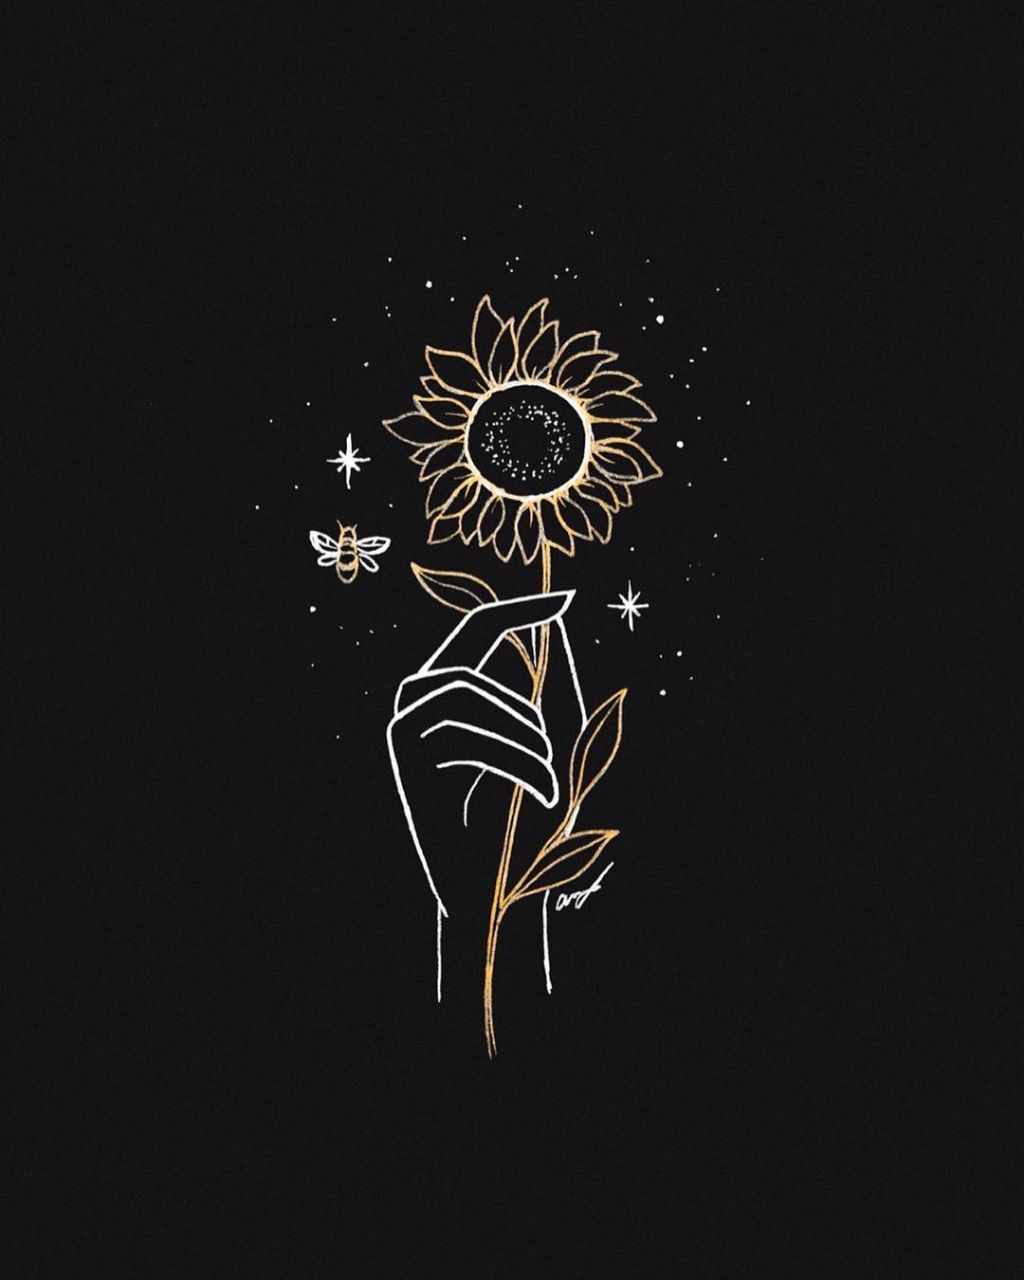 Of Acts Art on Twitter. Sunflower wallpaper, Cute wallpaper background, Black aesthetic wallpaper